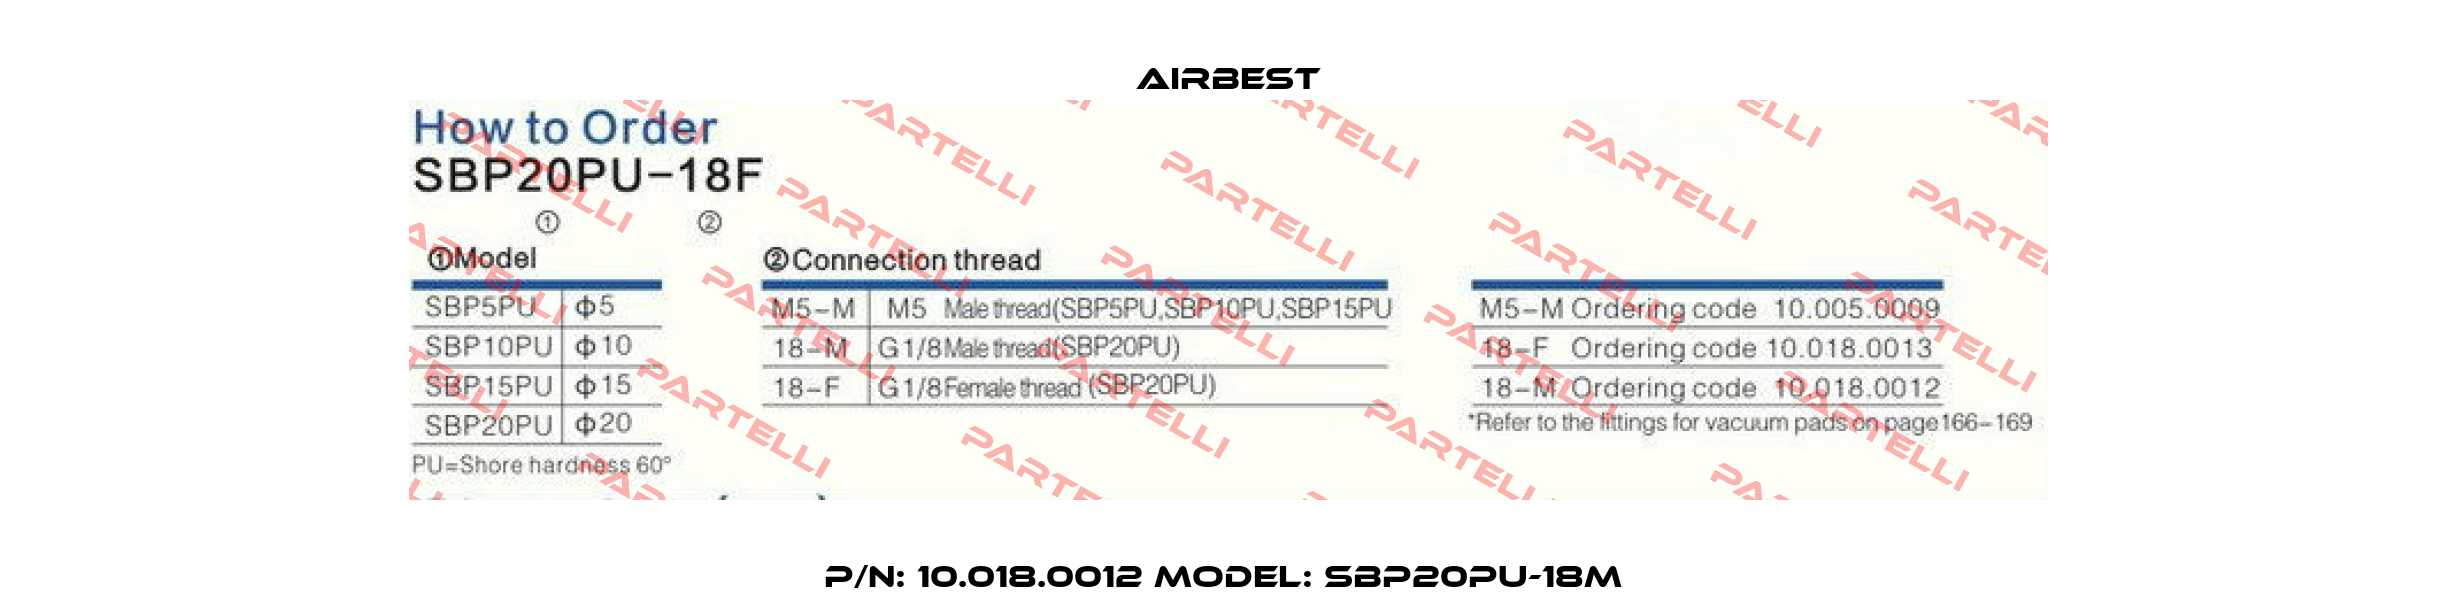 P/N: 10.018.0012 Model: SBP20PU-18M  Airbest